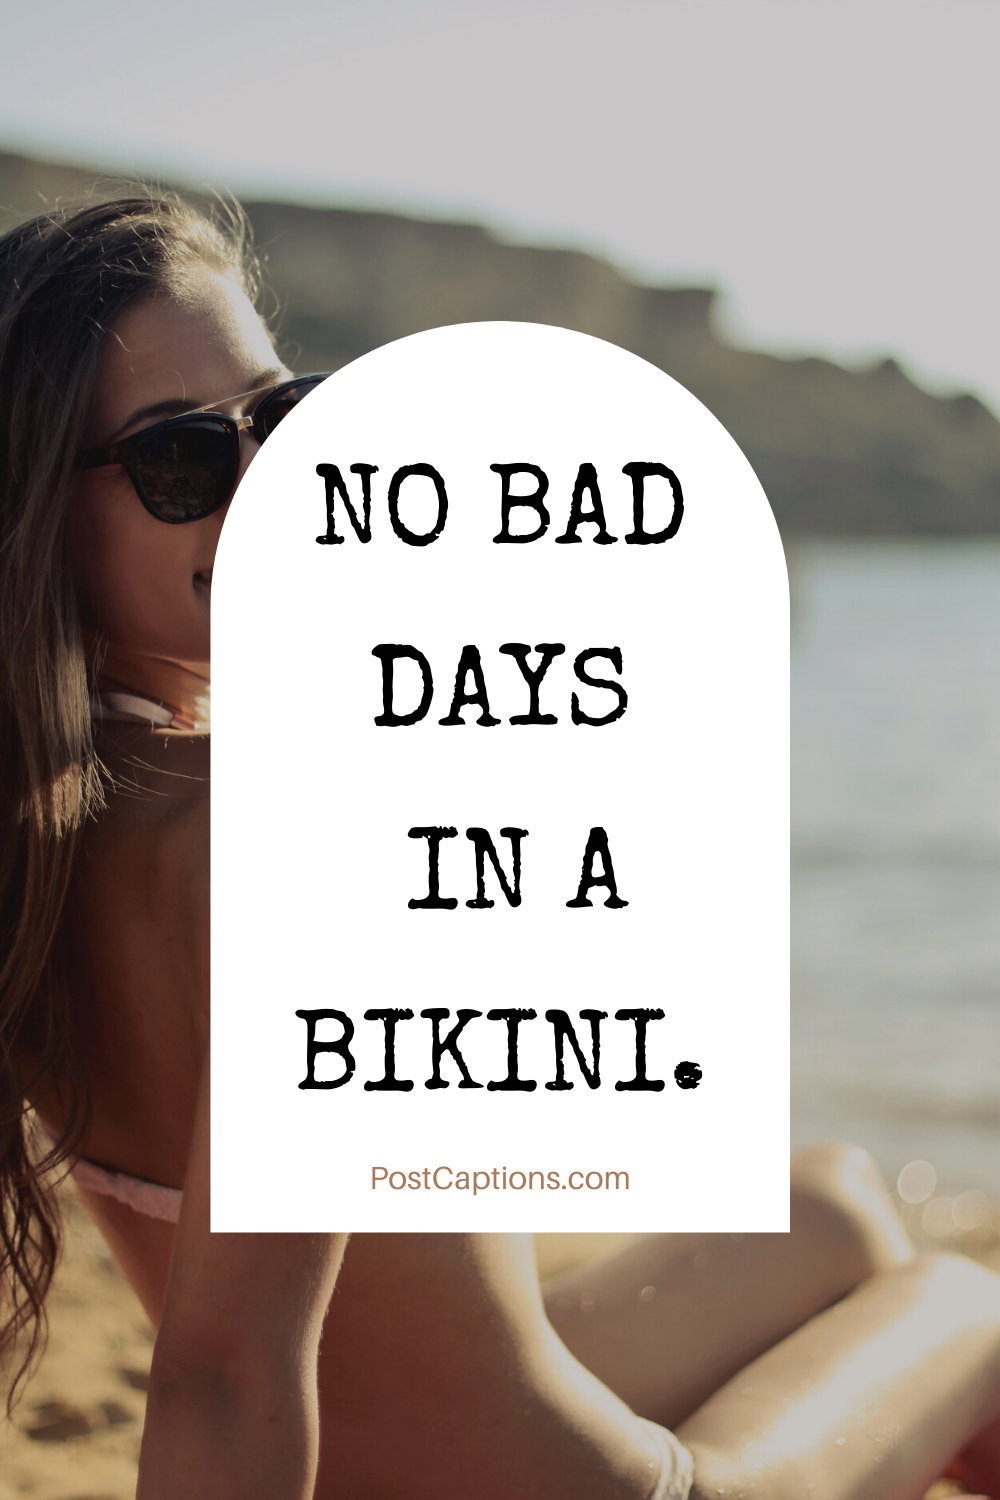 Bikini captions